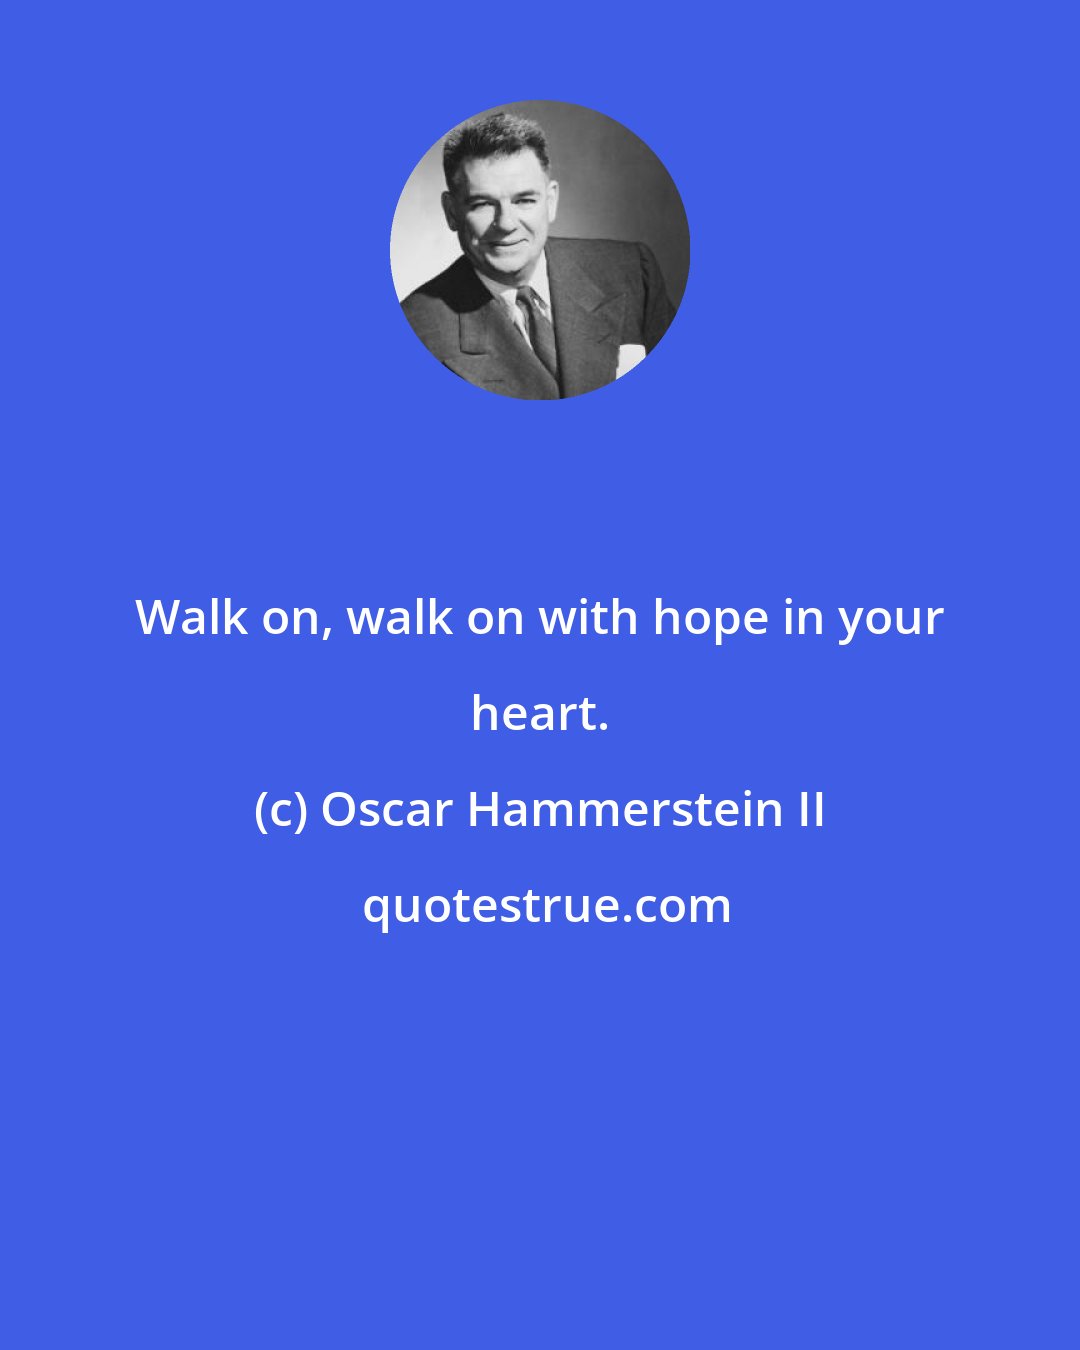 Oscar Hammerstein II: Walk on, walk on with hope in your heart.